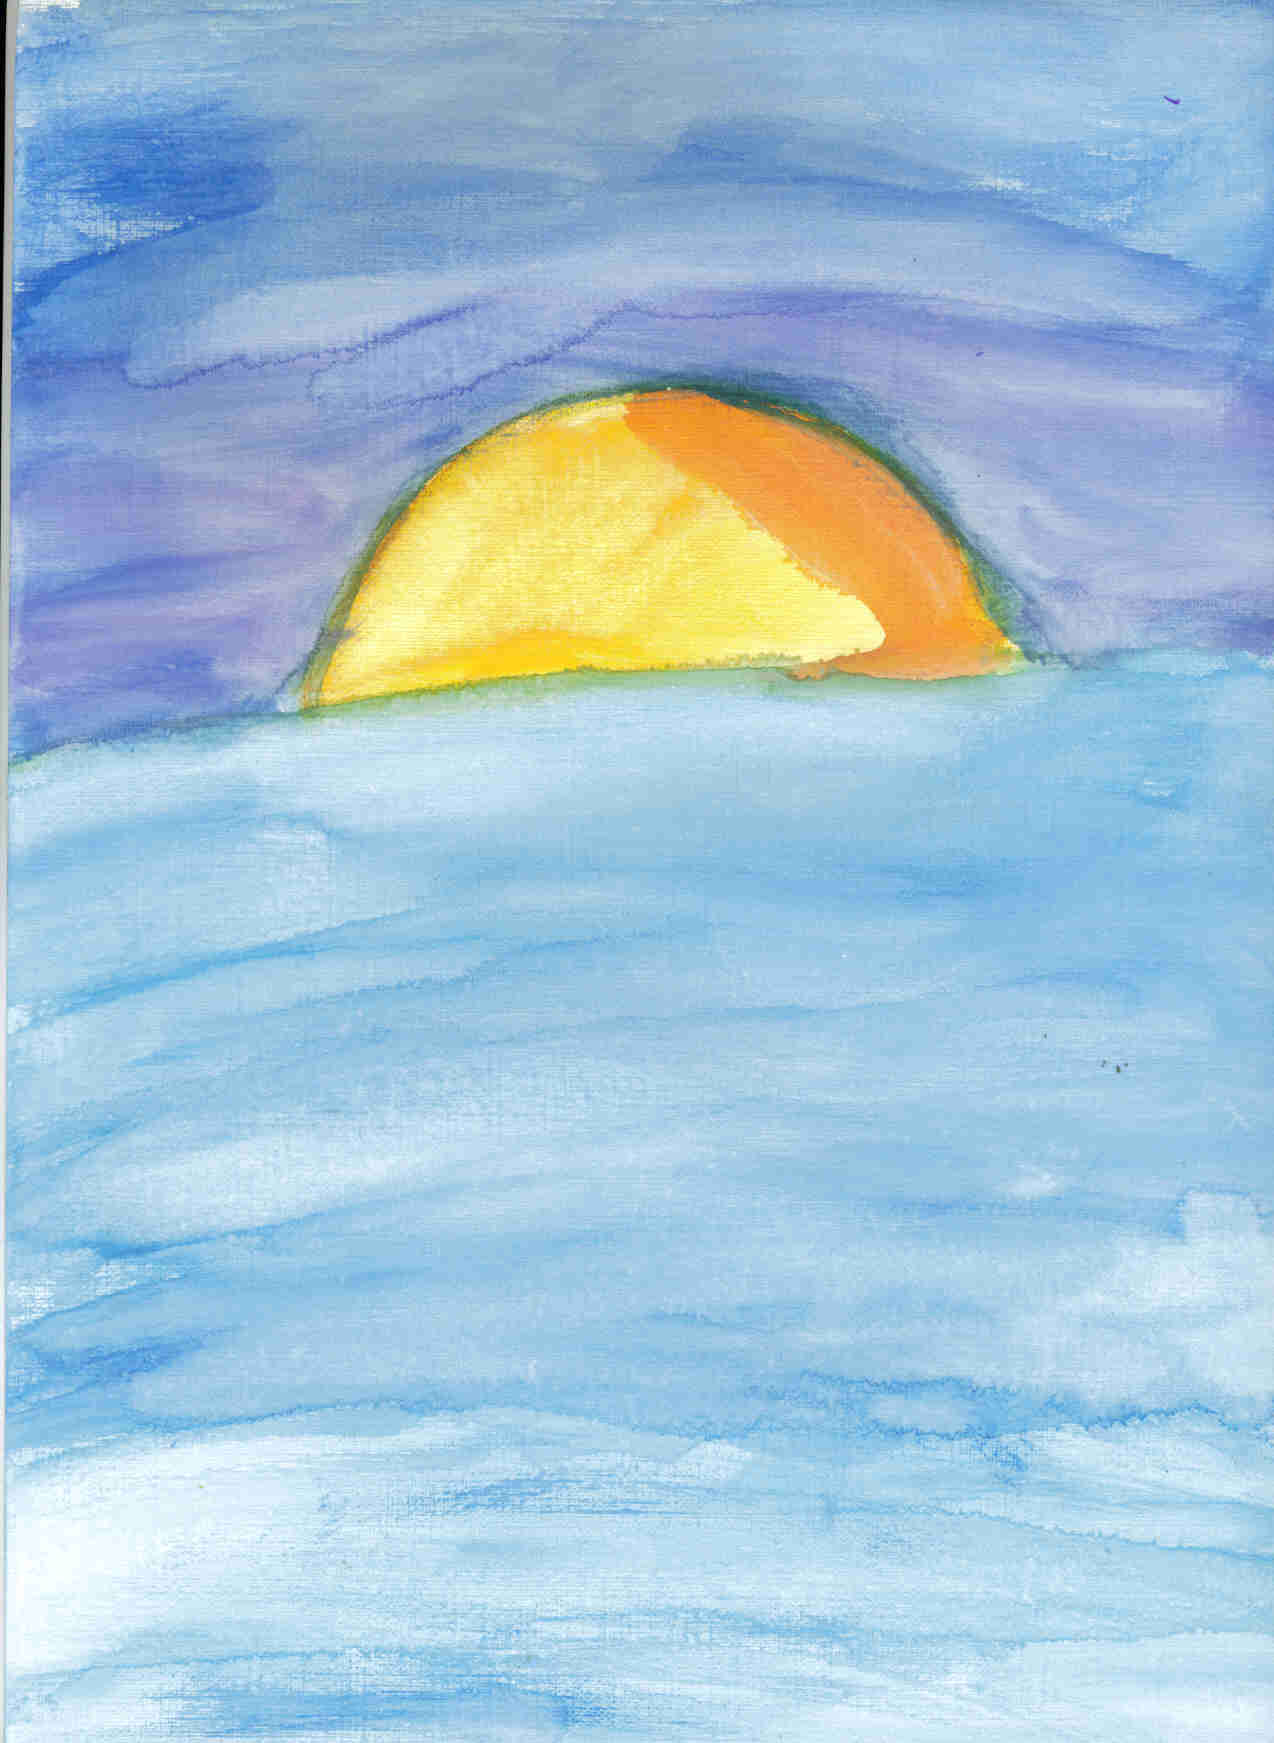 Watercolor Seascape by Weevil_Underwood